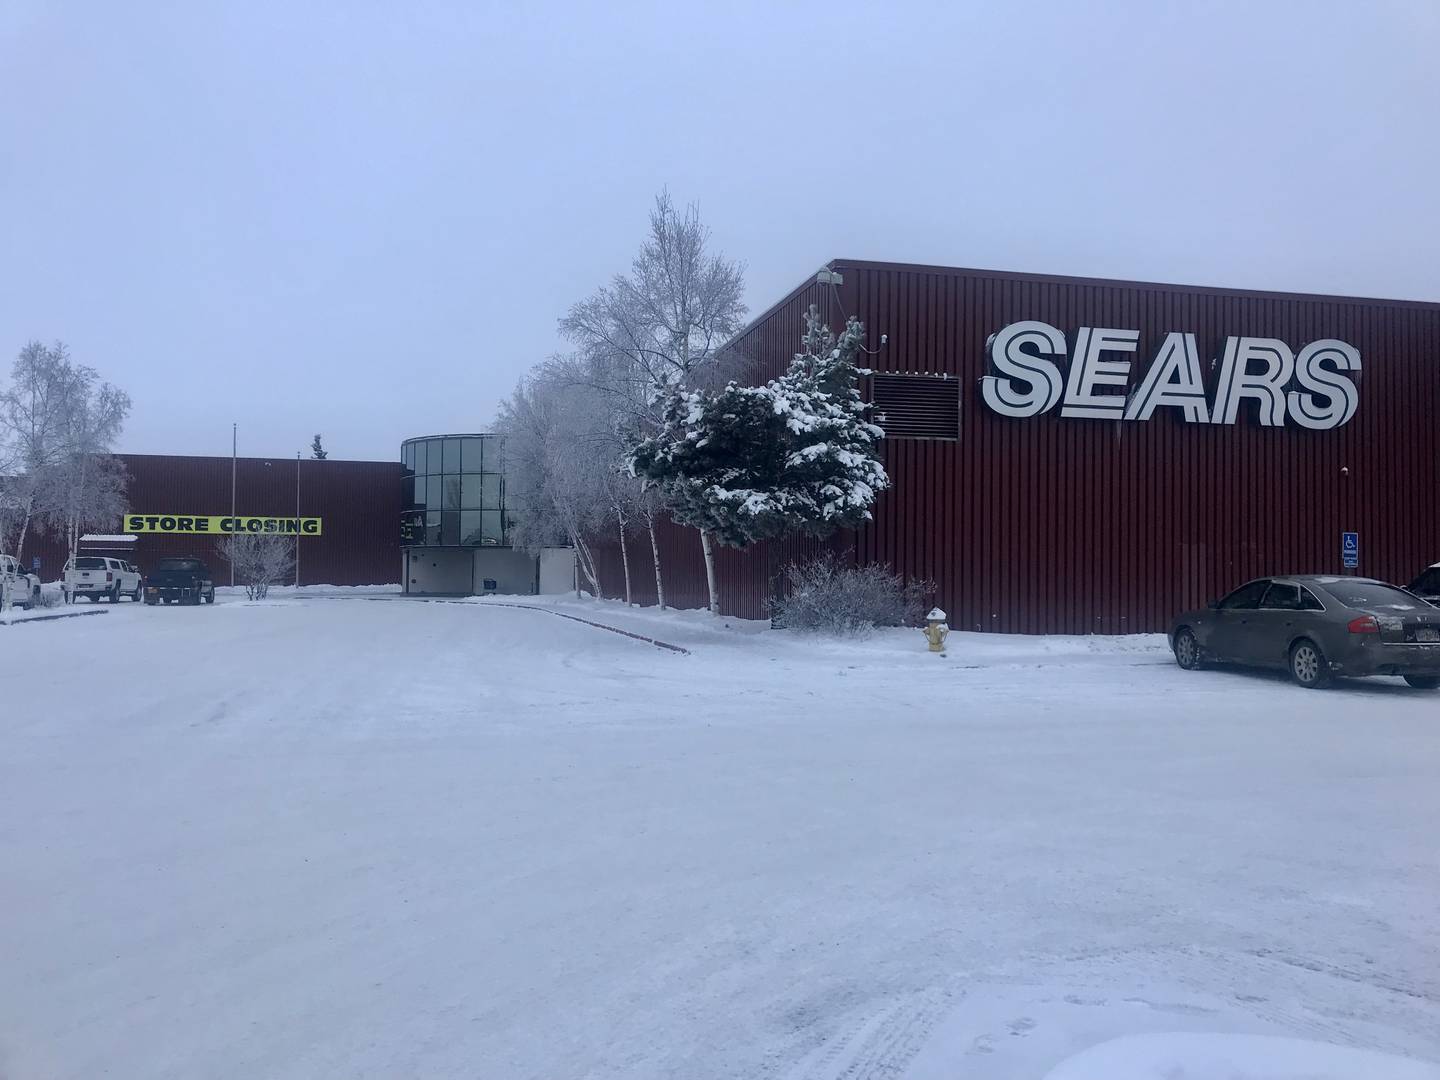 Fairbanks Sears store closing